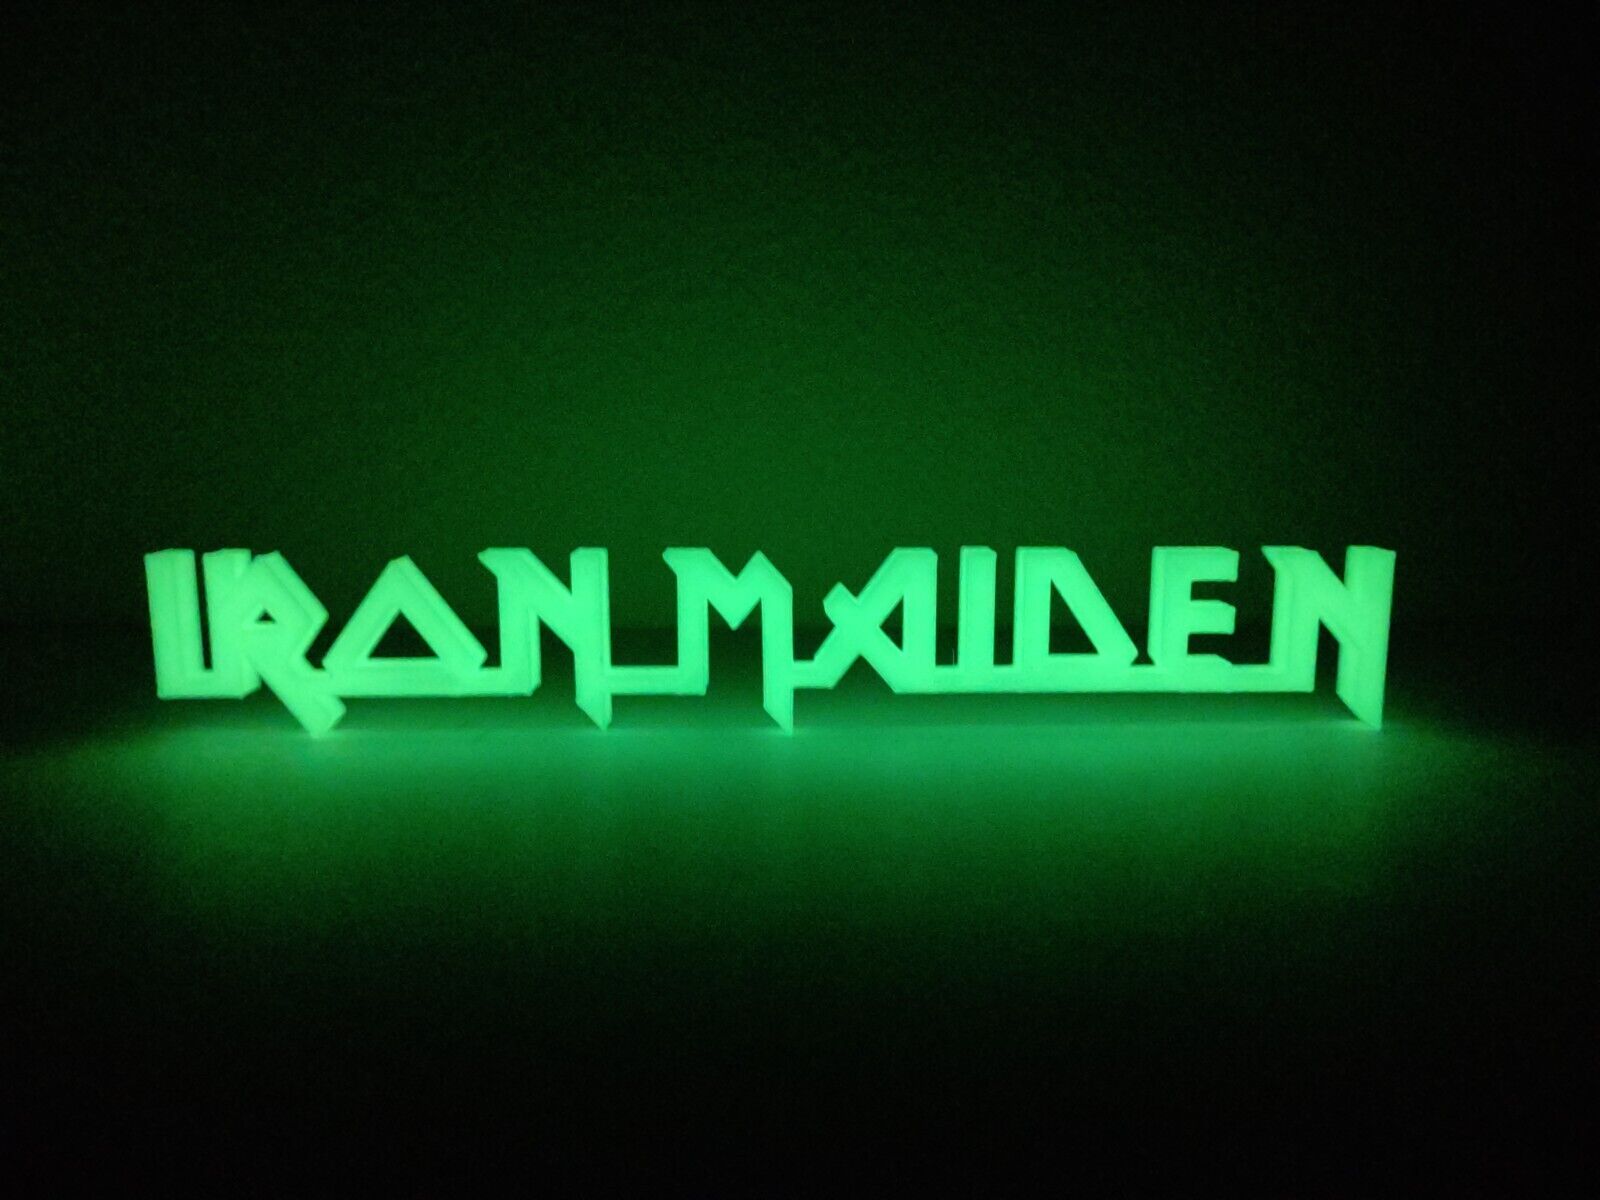 Iron Maiden GITD Display Sign Glow-In-The-Dark